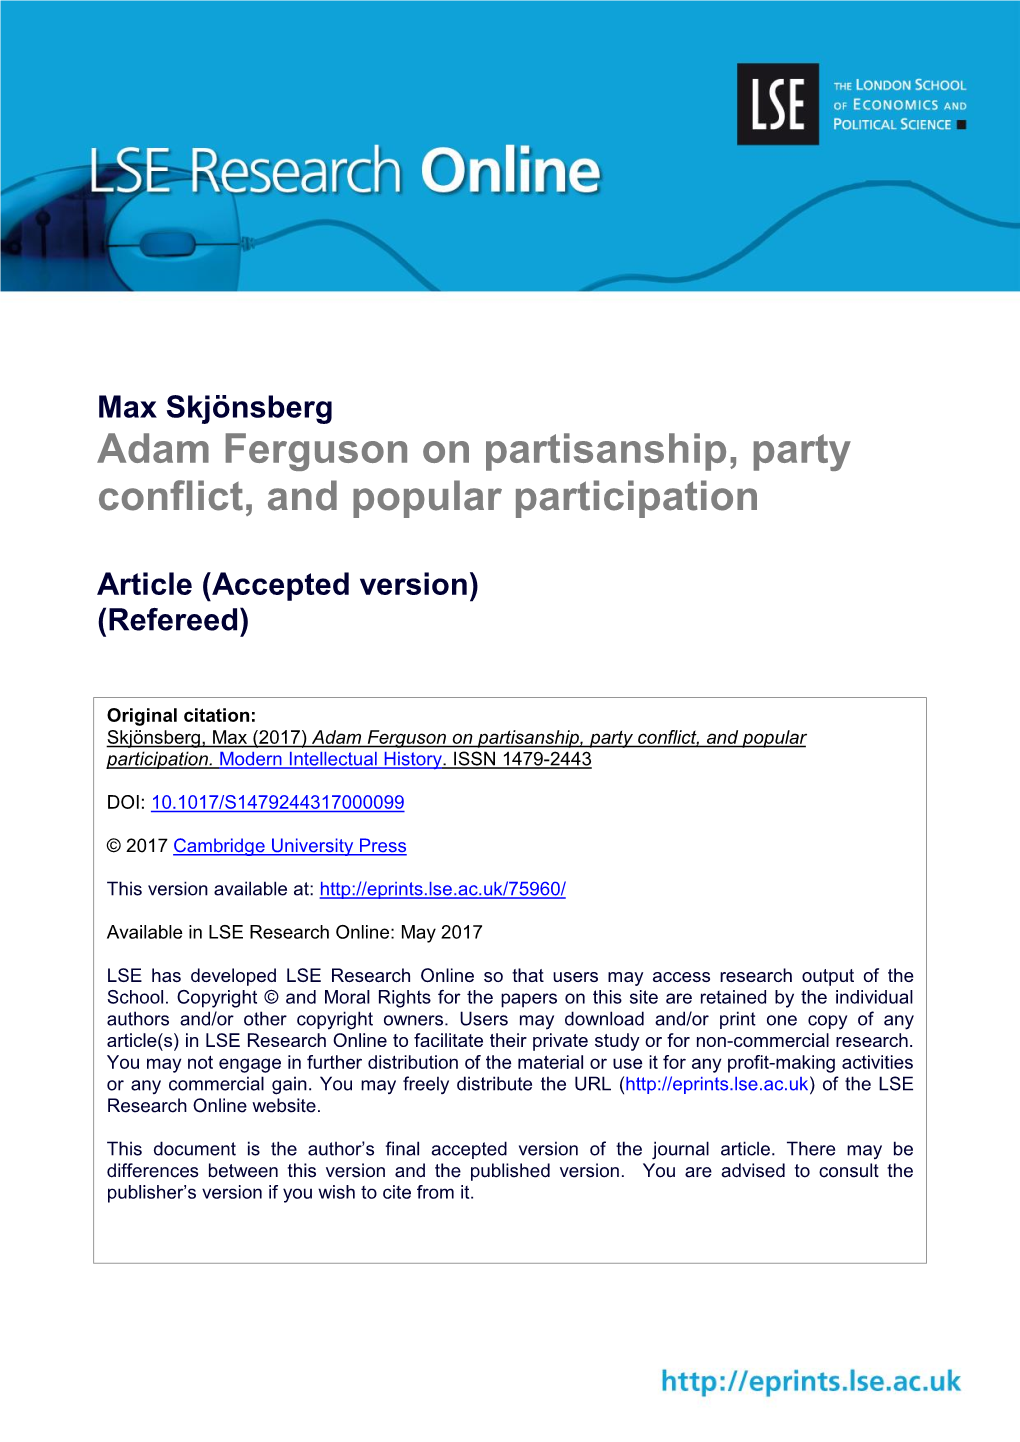 Adam Ferguson on Partisanship, Party Conflict, and Popular Participation